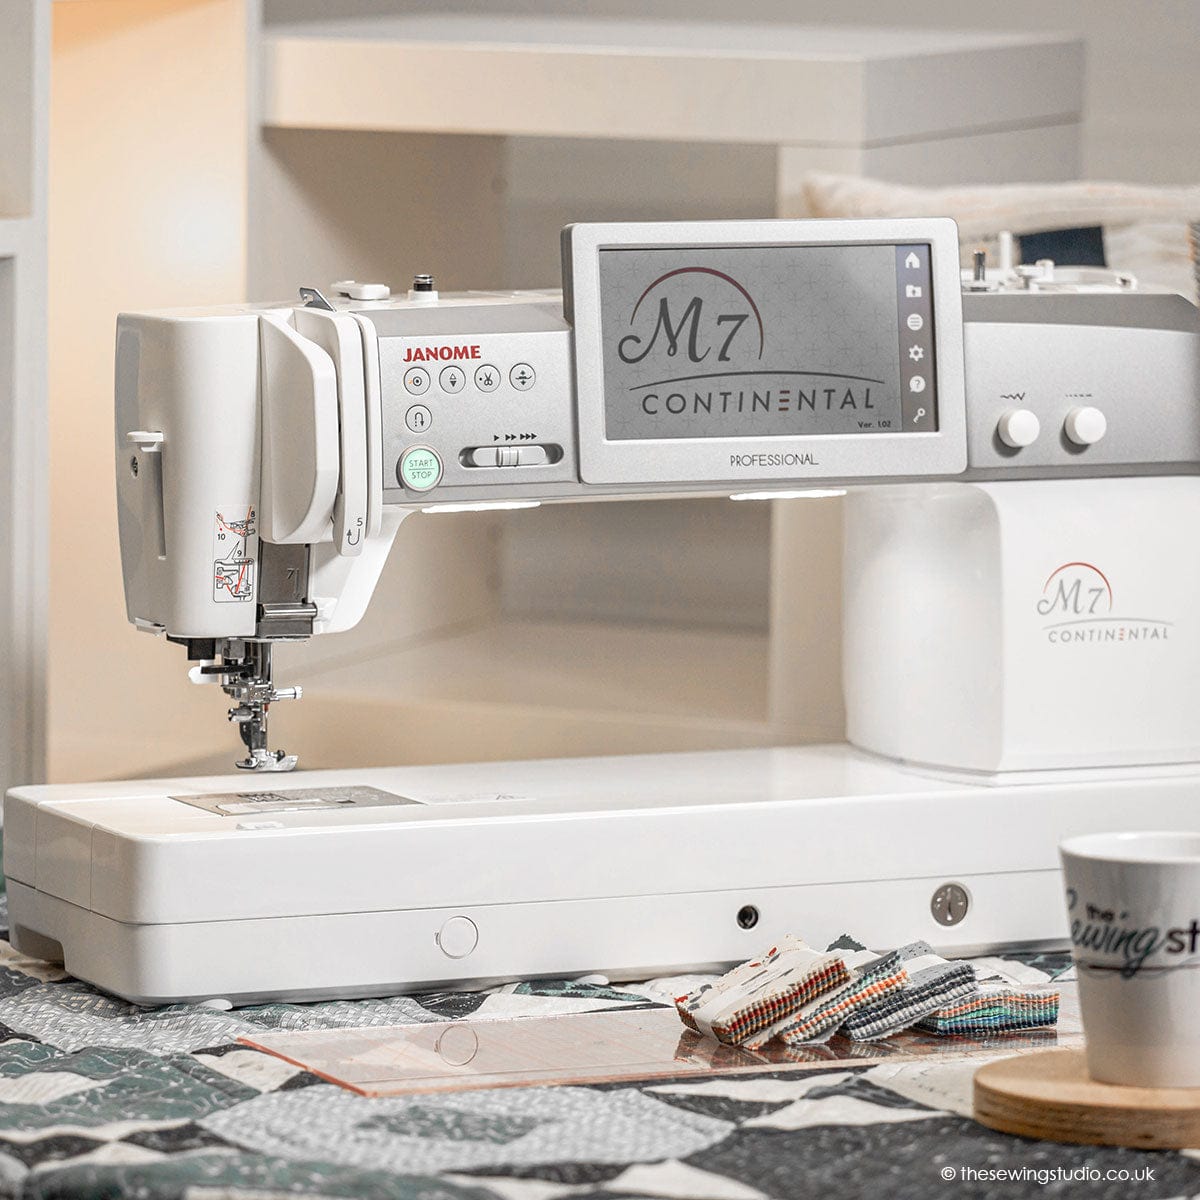 Janome M7 Continental Sewing Machine Grey Background Lifestyle Photo